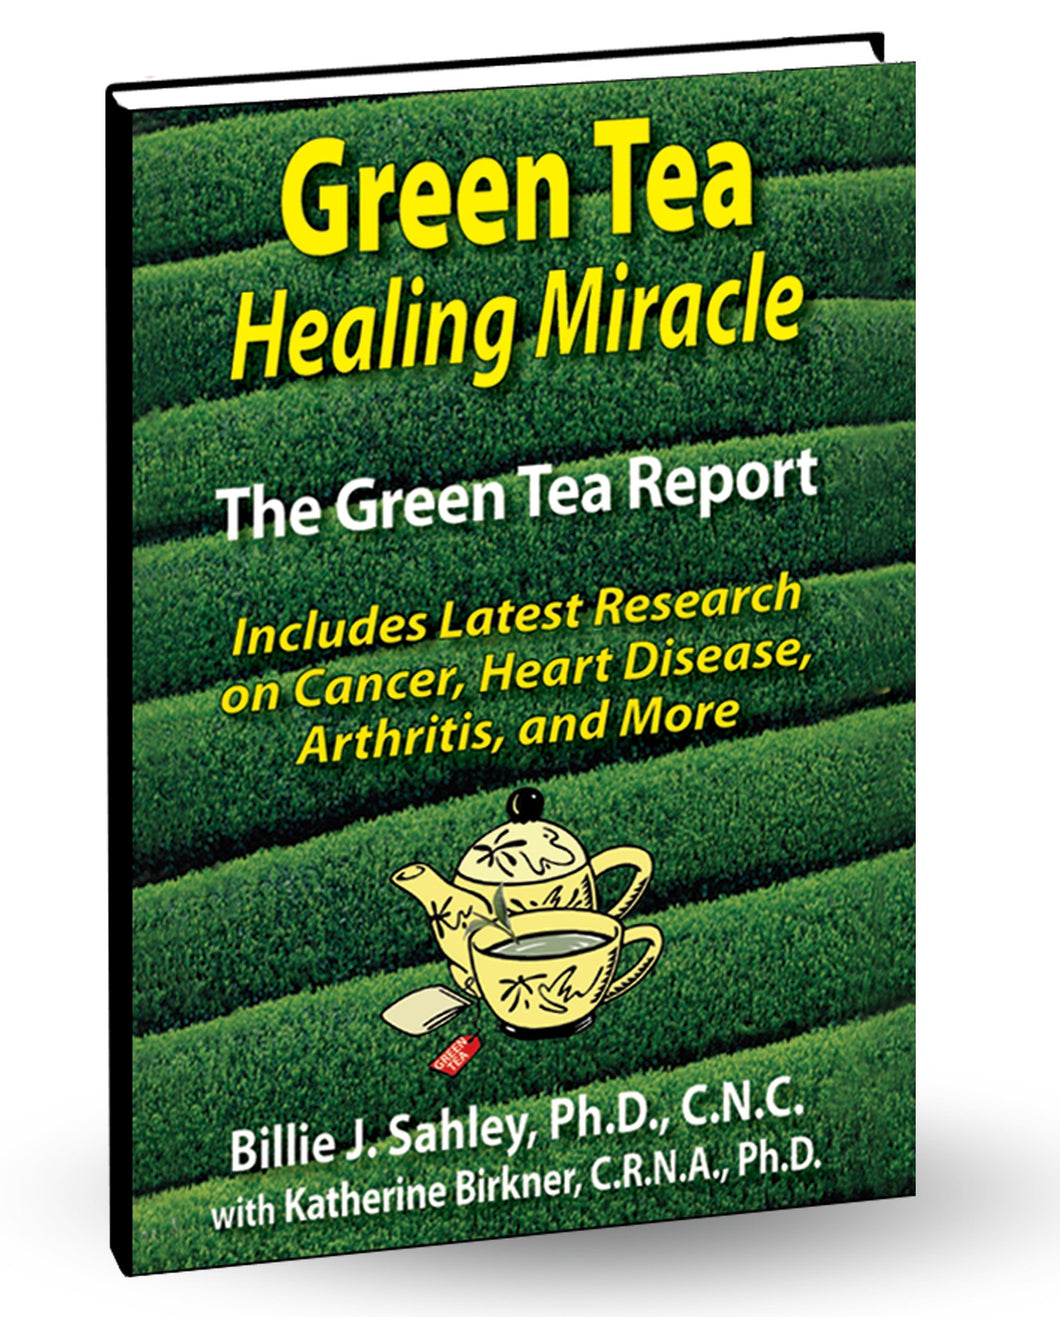 Green Tea Healing Miracle by Billie J. Sahley, Ph.D., C.N.C. with Katherine Birkner, C.R.N.A., Ph.D.